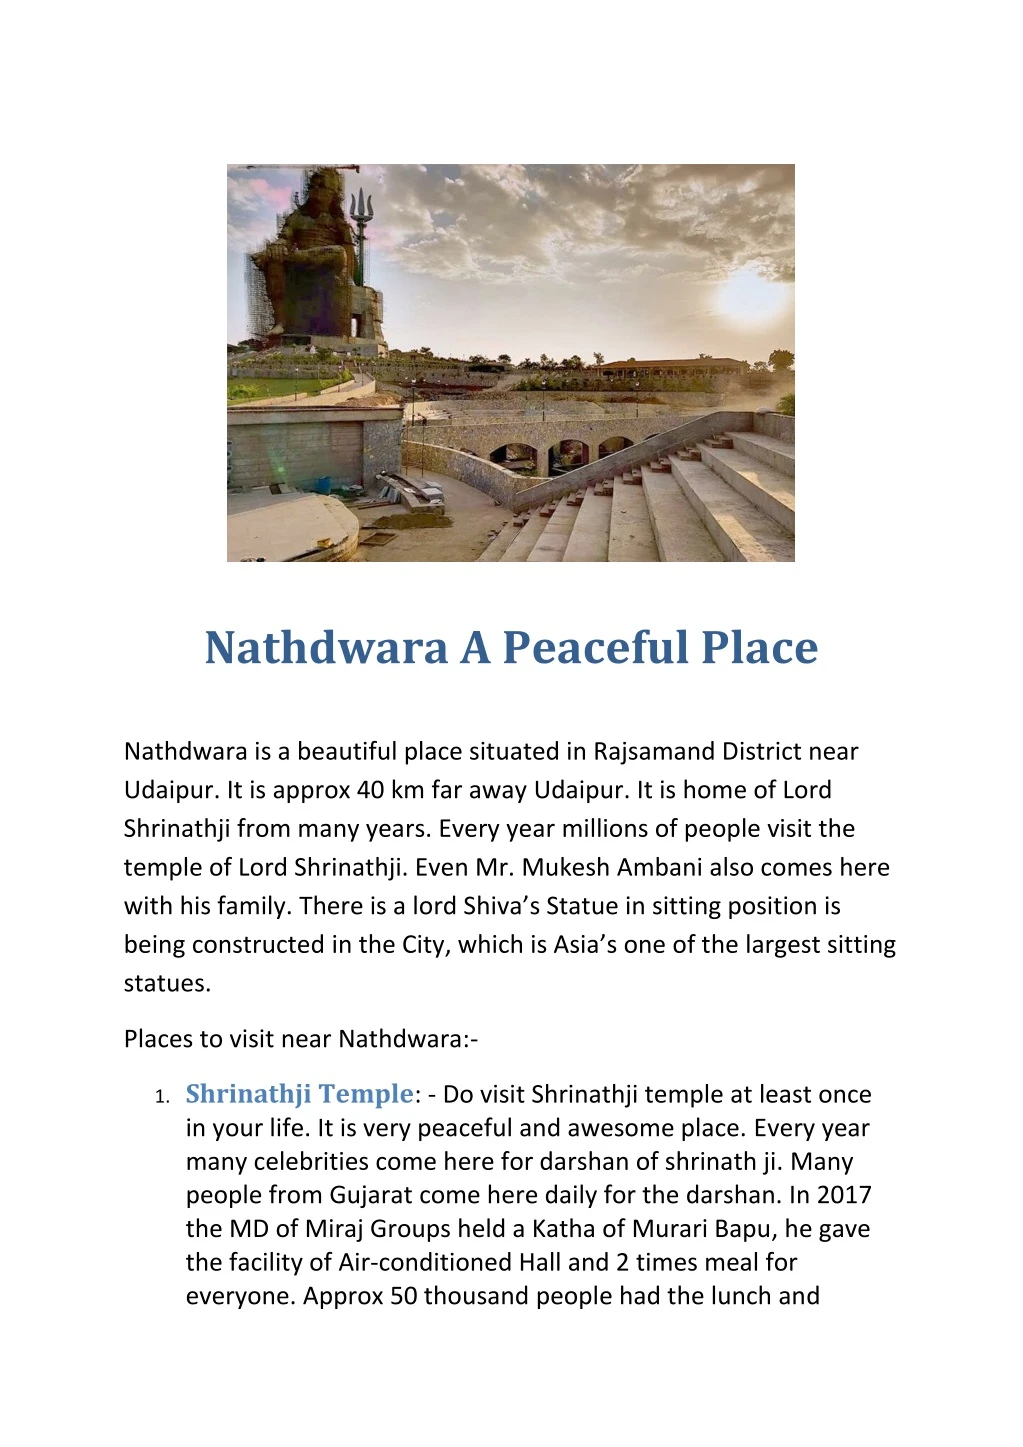 nathdwara a peaceful place